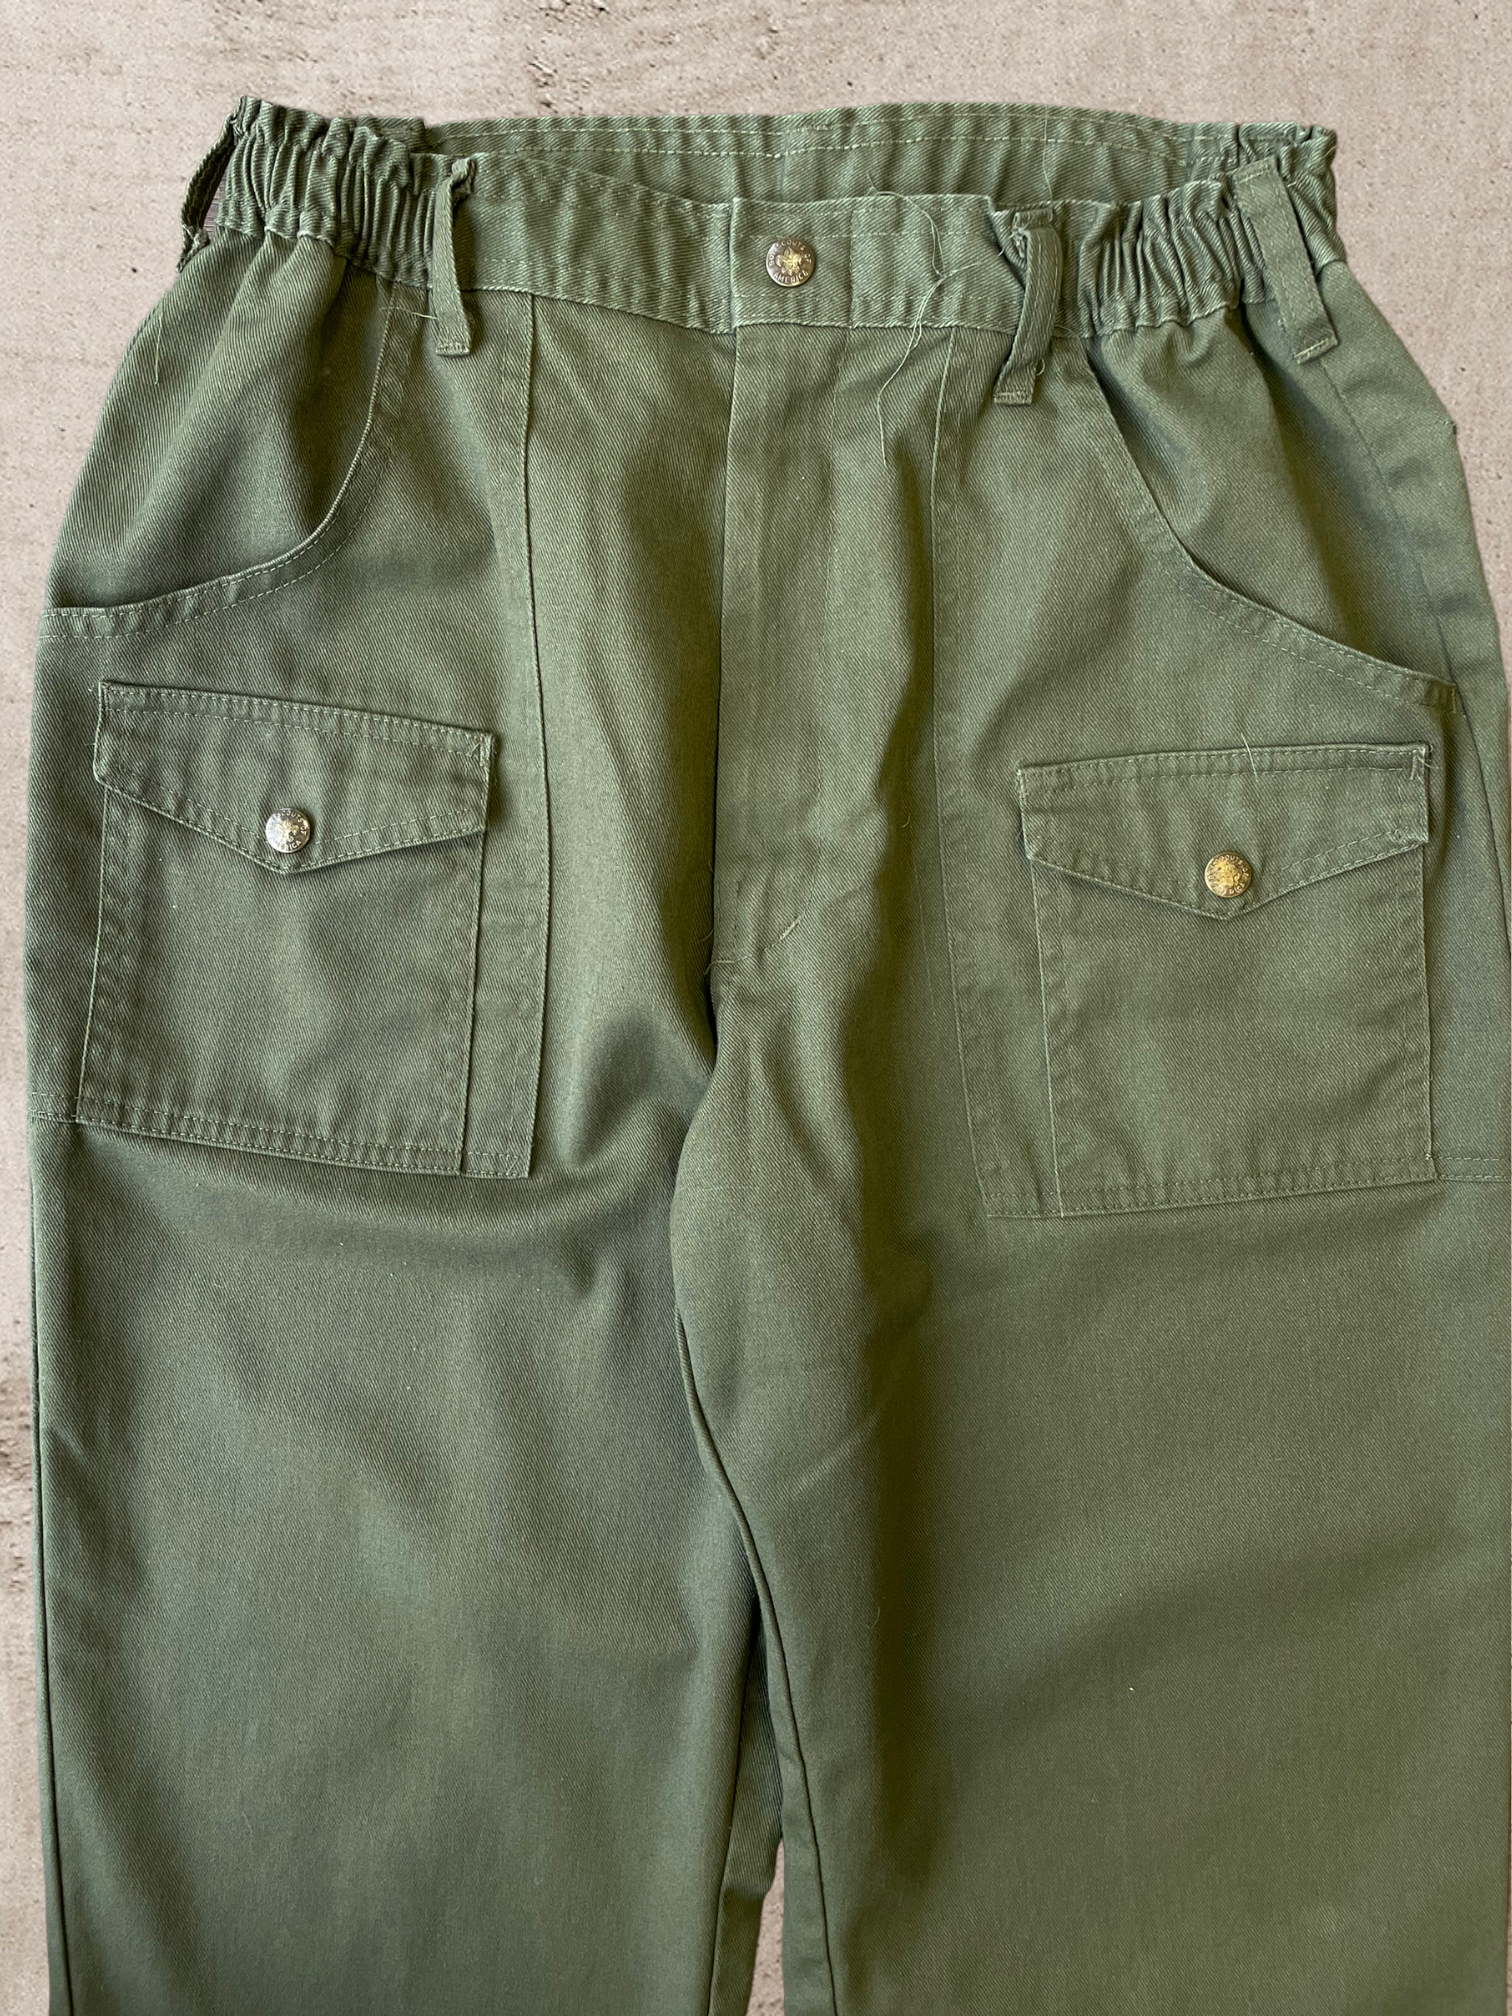 80s Boy Scout Cargo Pants - 30x30